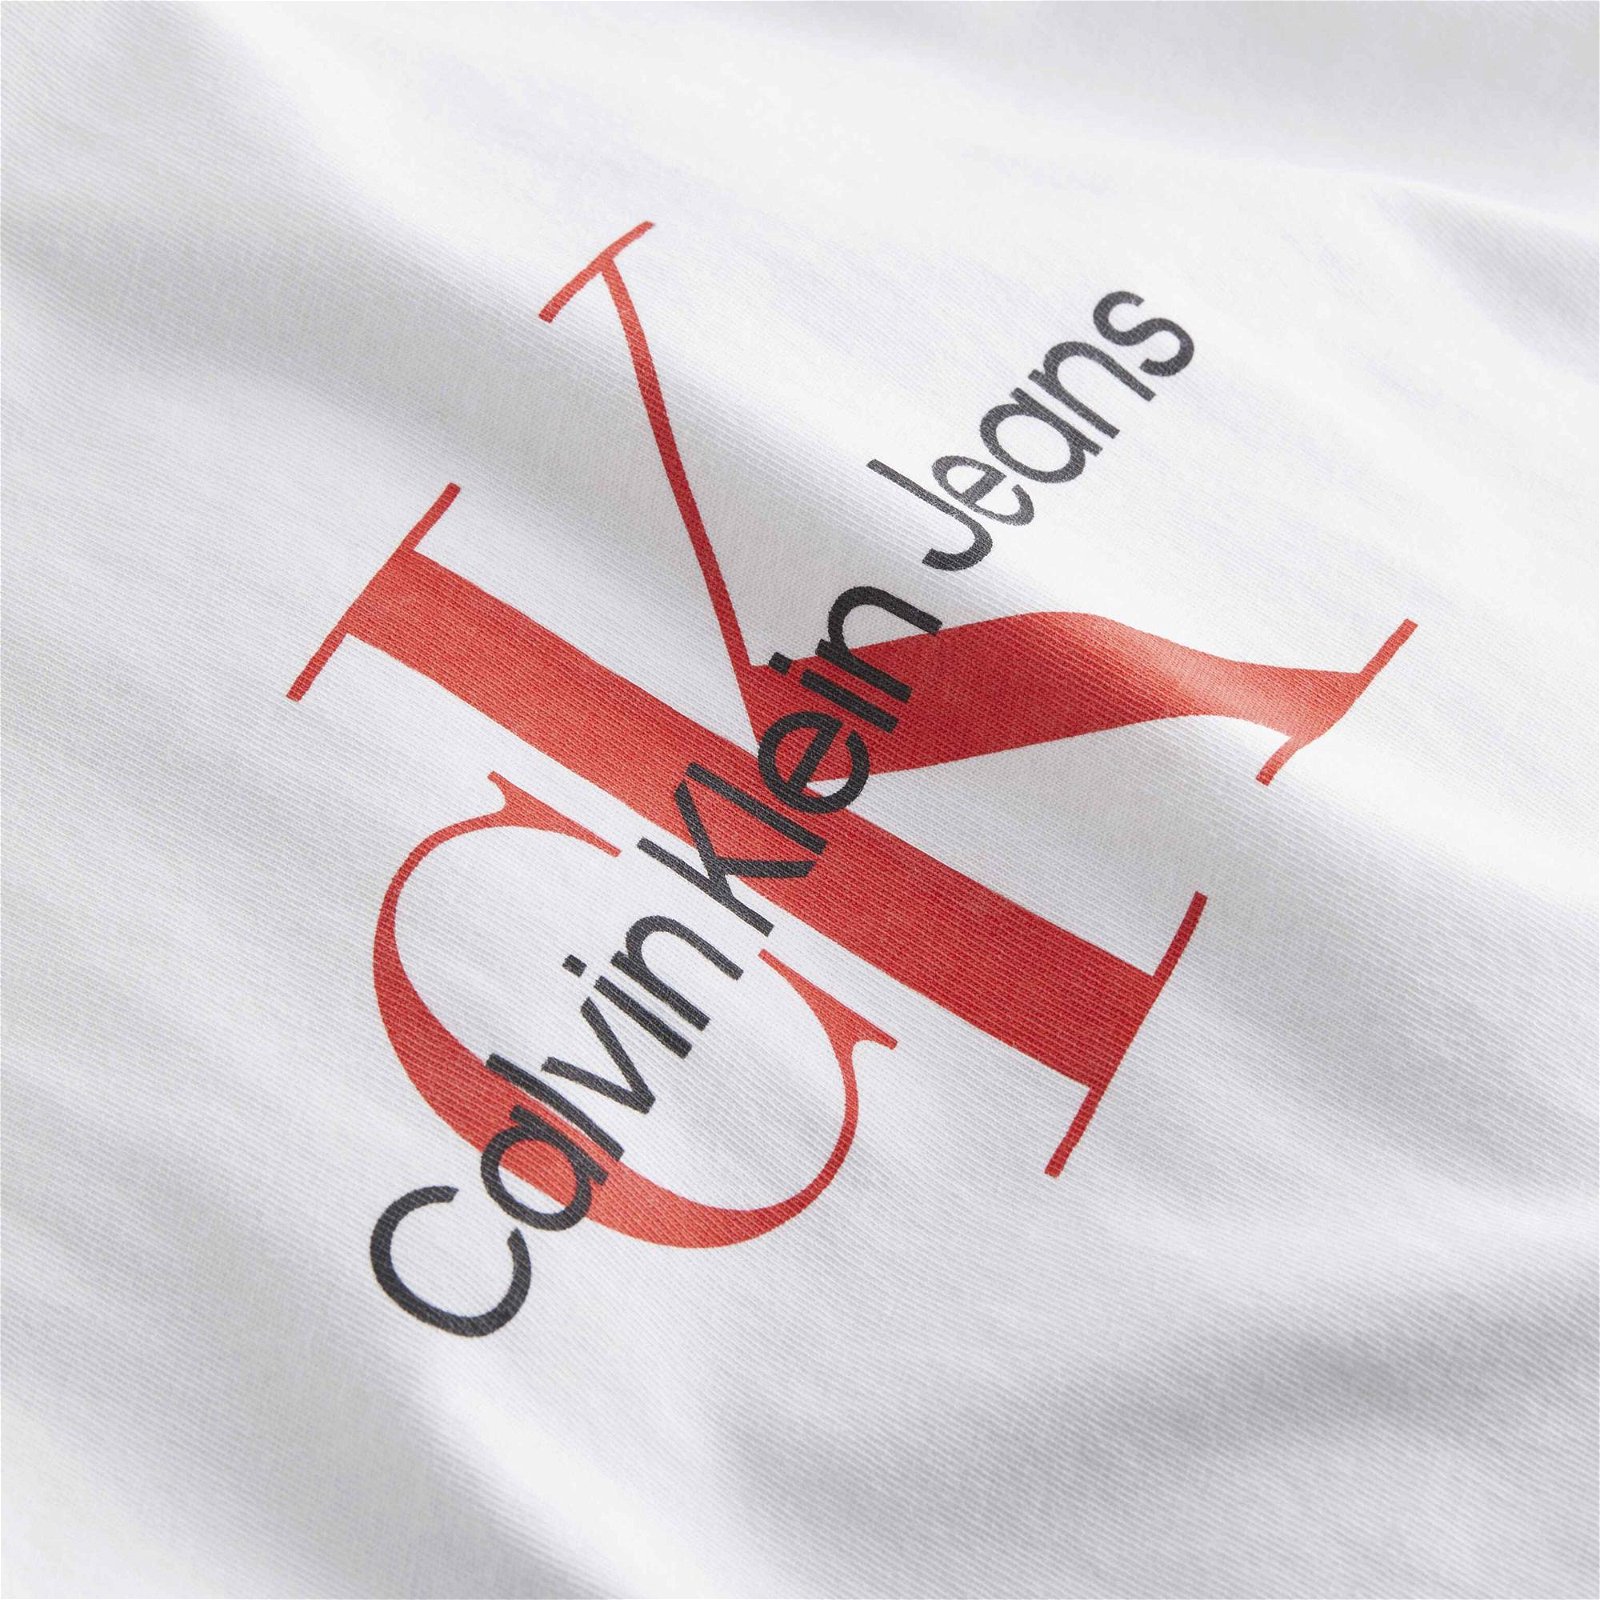 Calvin Klein Jeans Monologo Erkek Beyaz T-Shirt